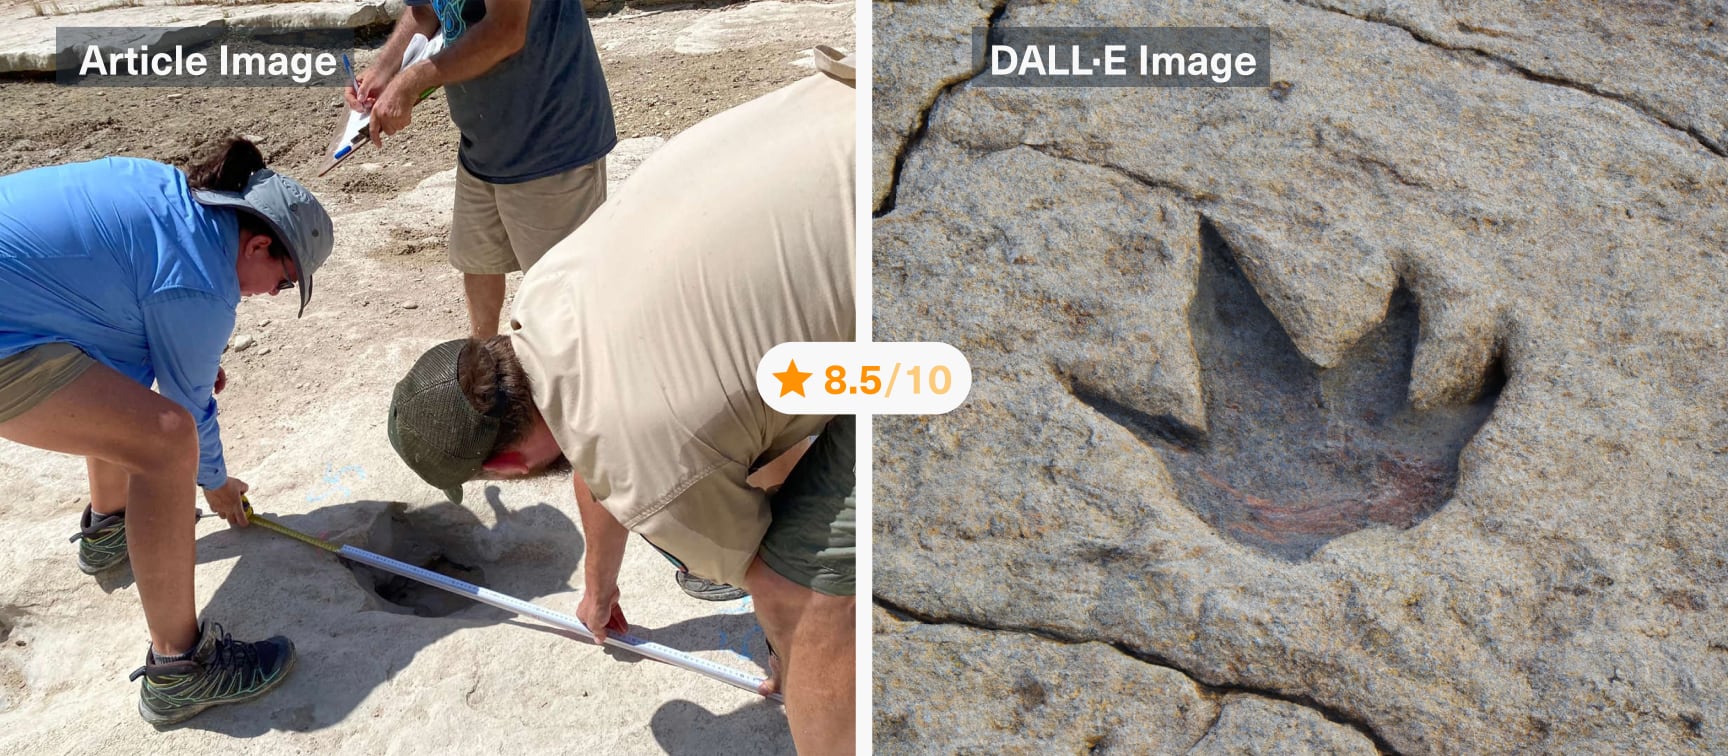 DALL-E meets News API: “Drought reveals new dinosaur tracks in Texas”